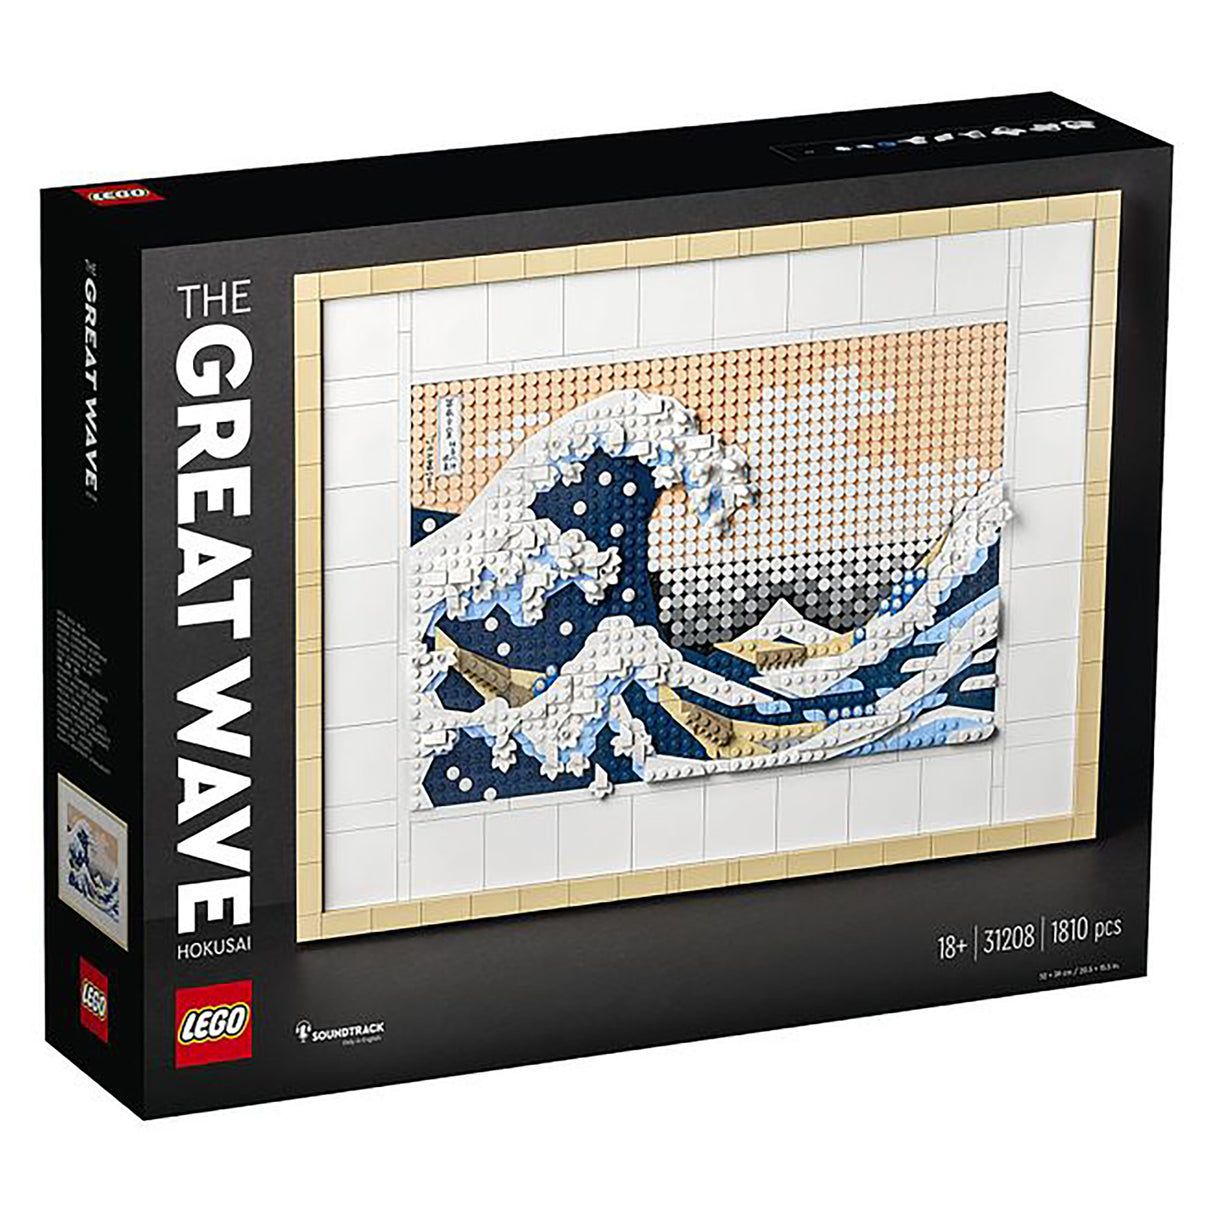 LEGO Art Hokusai, The Great Wave 31208 (1,810 pieces)